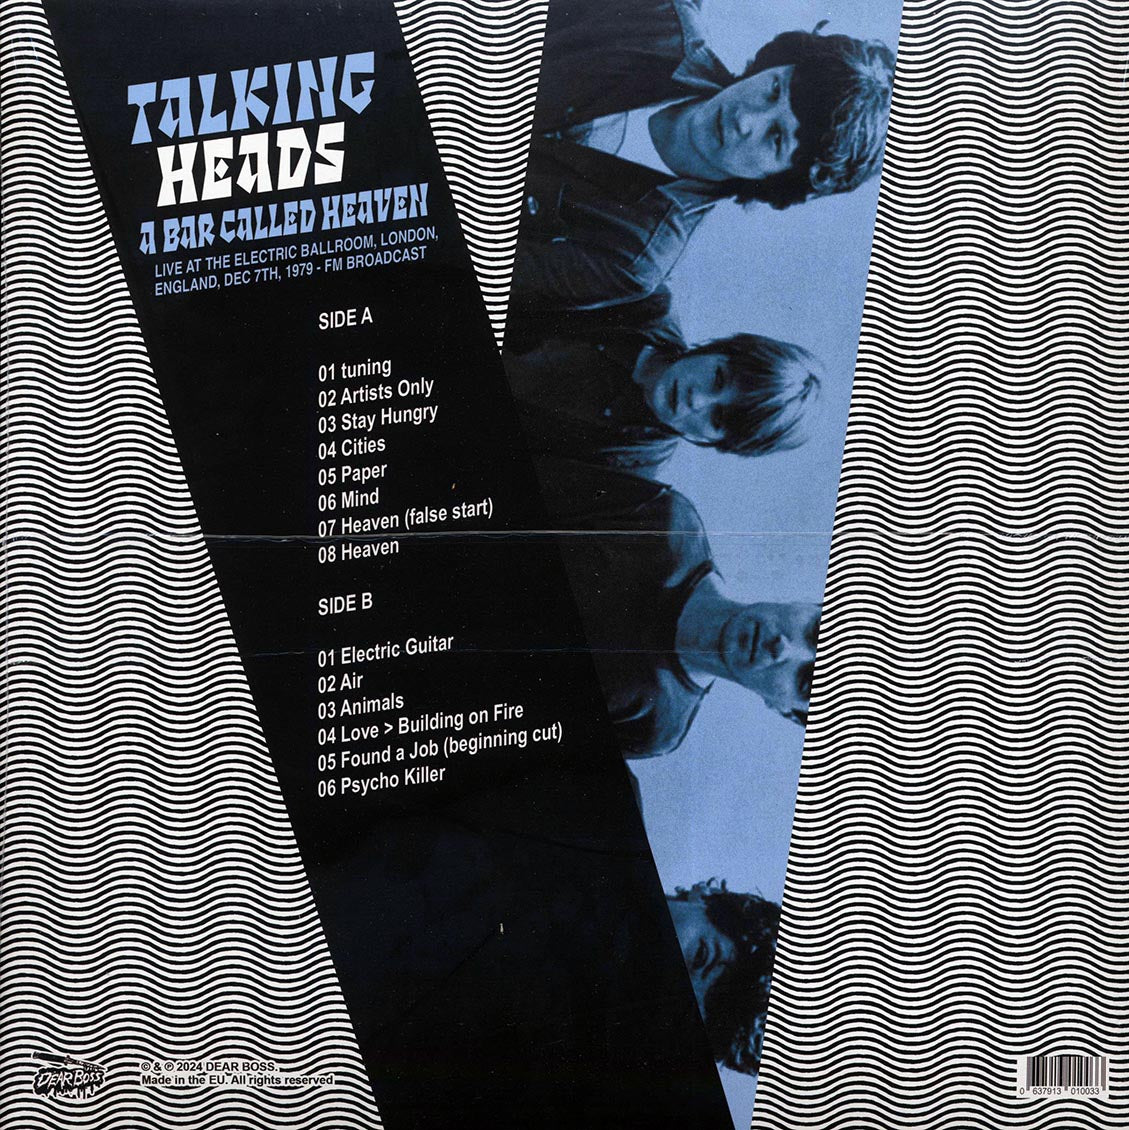 Talking Heads - A Bar Called Heaven: Live At The Electric Ballroom, London, England, Dec 7th 1979 - Vinyl LP, LP